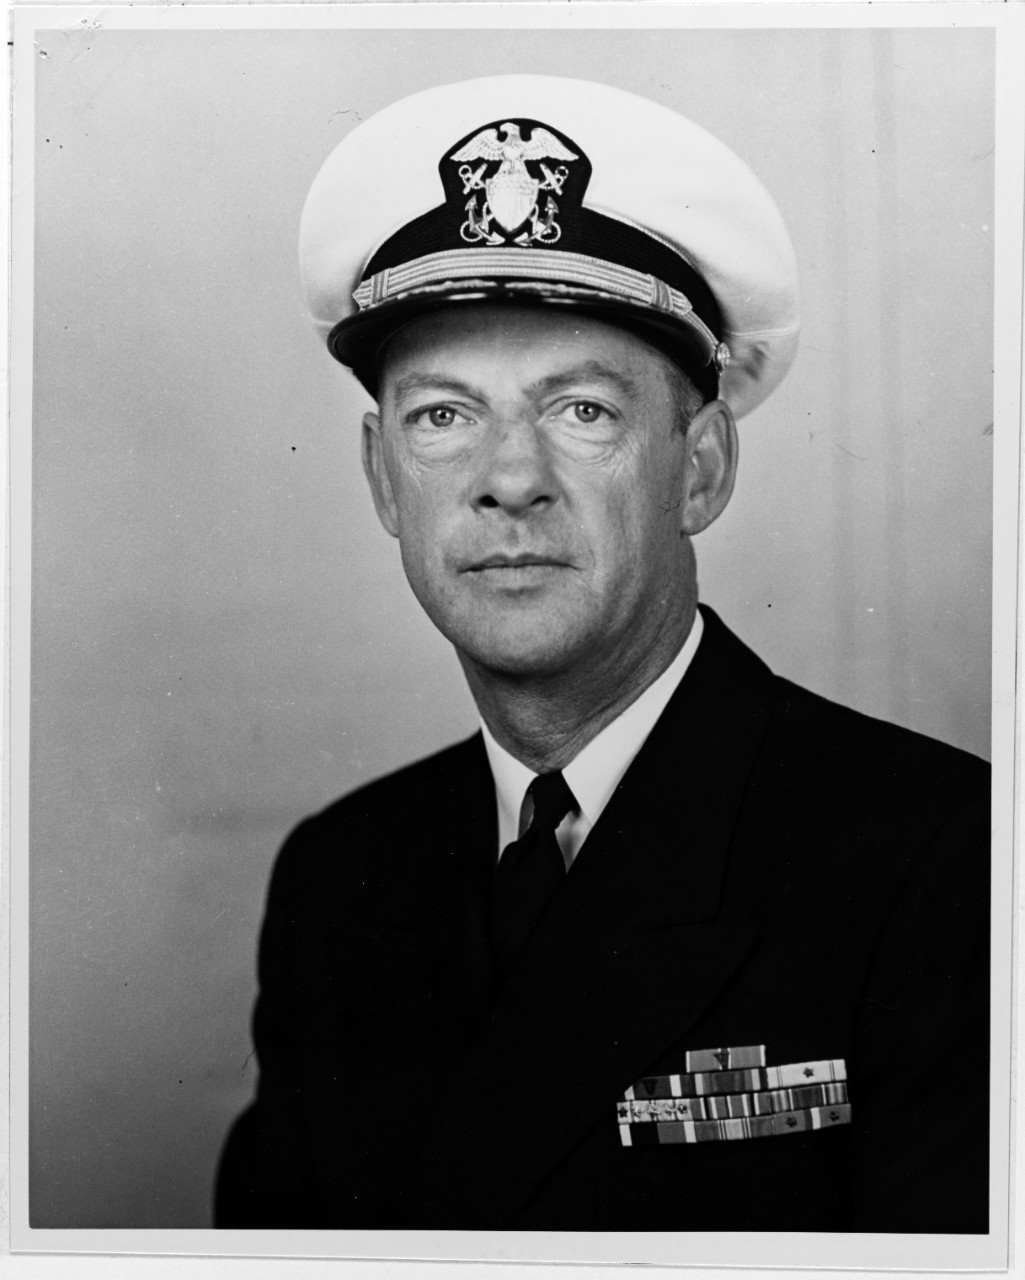 NH 47500 Captain Alan M. Nibbs, USN